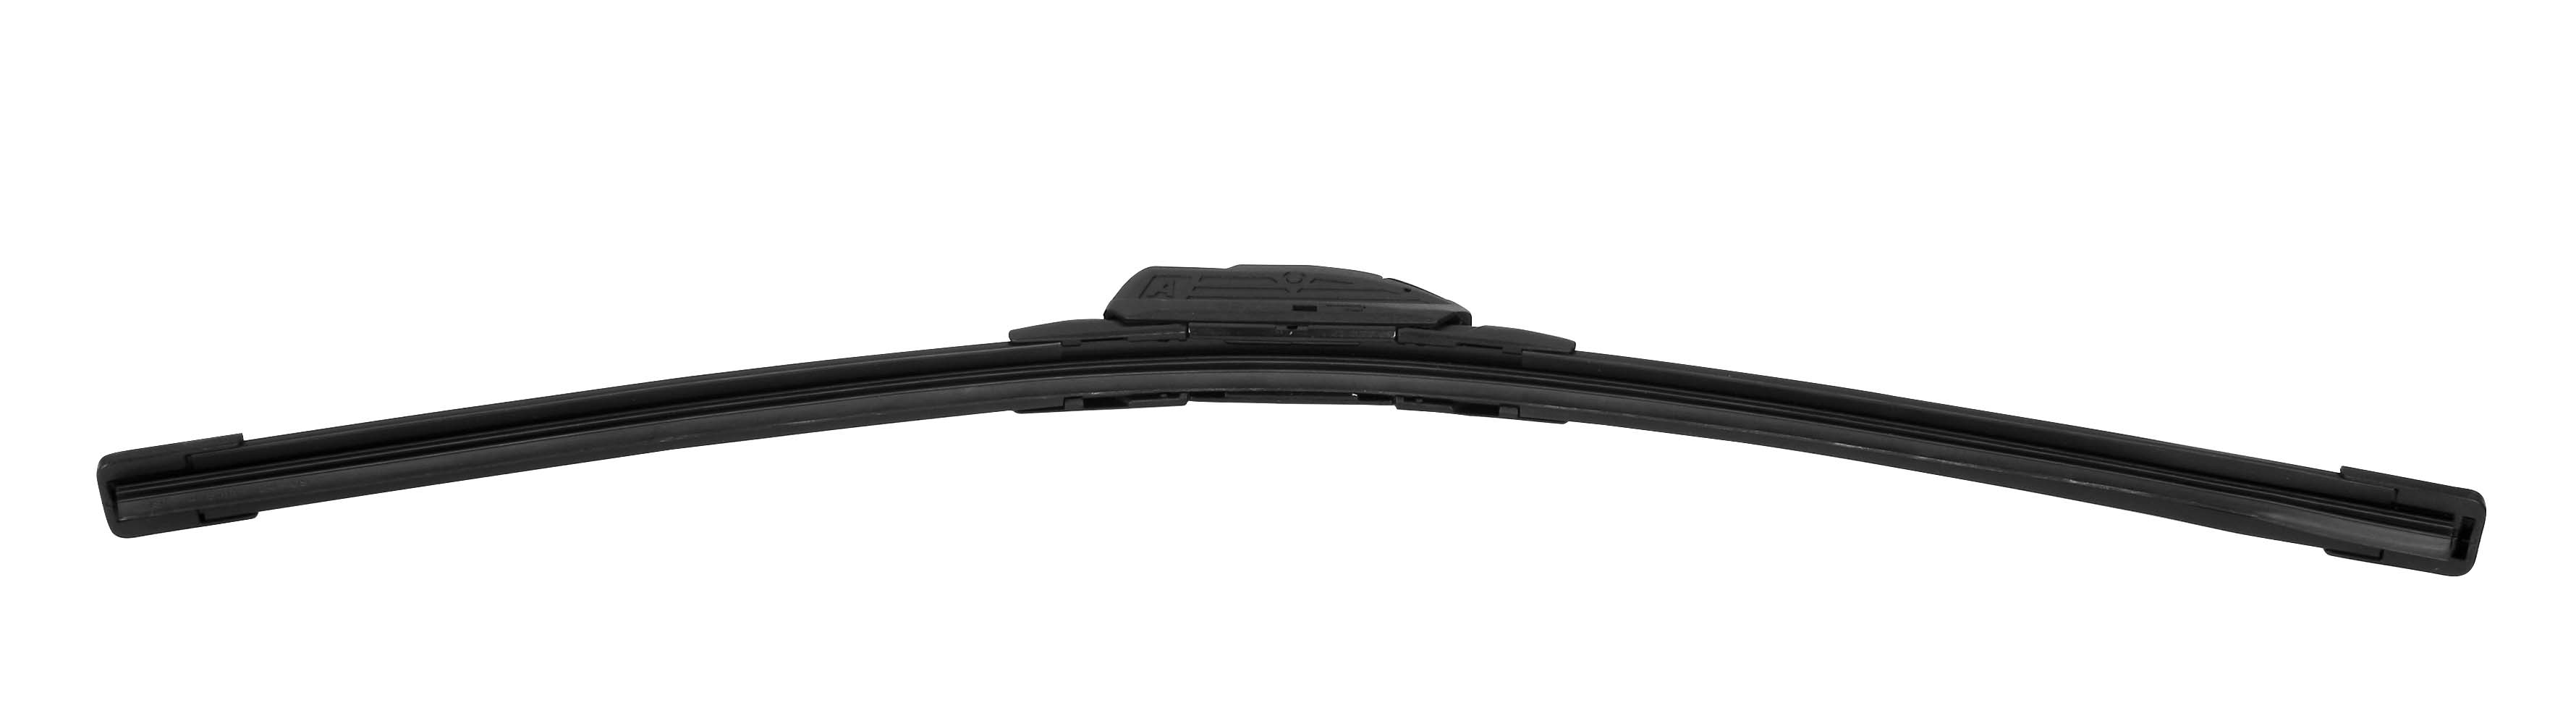 Filson wiper blade 8 adaptors 41 cm (16“) - 1 pcs thumb